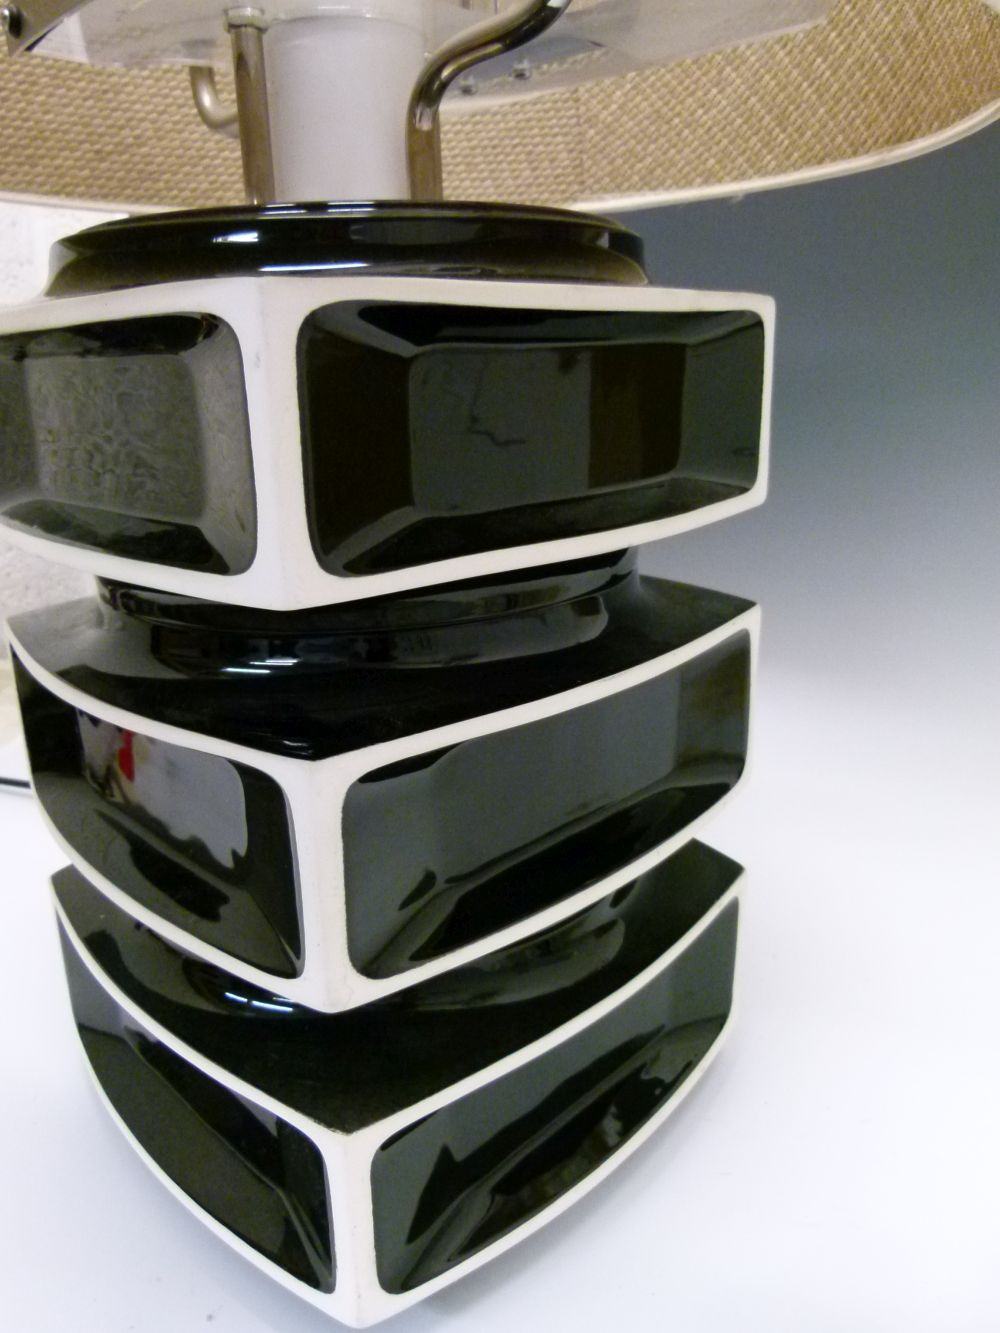 Modern Design - Dominic Bromley for Futuros - 'Amplamp', black-glazed ceramic combination table lamp - Image 3 of 12